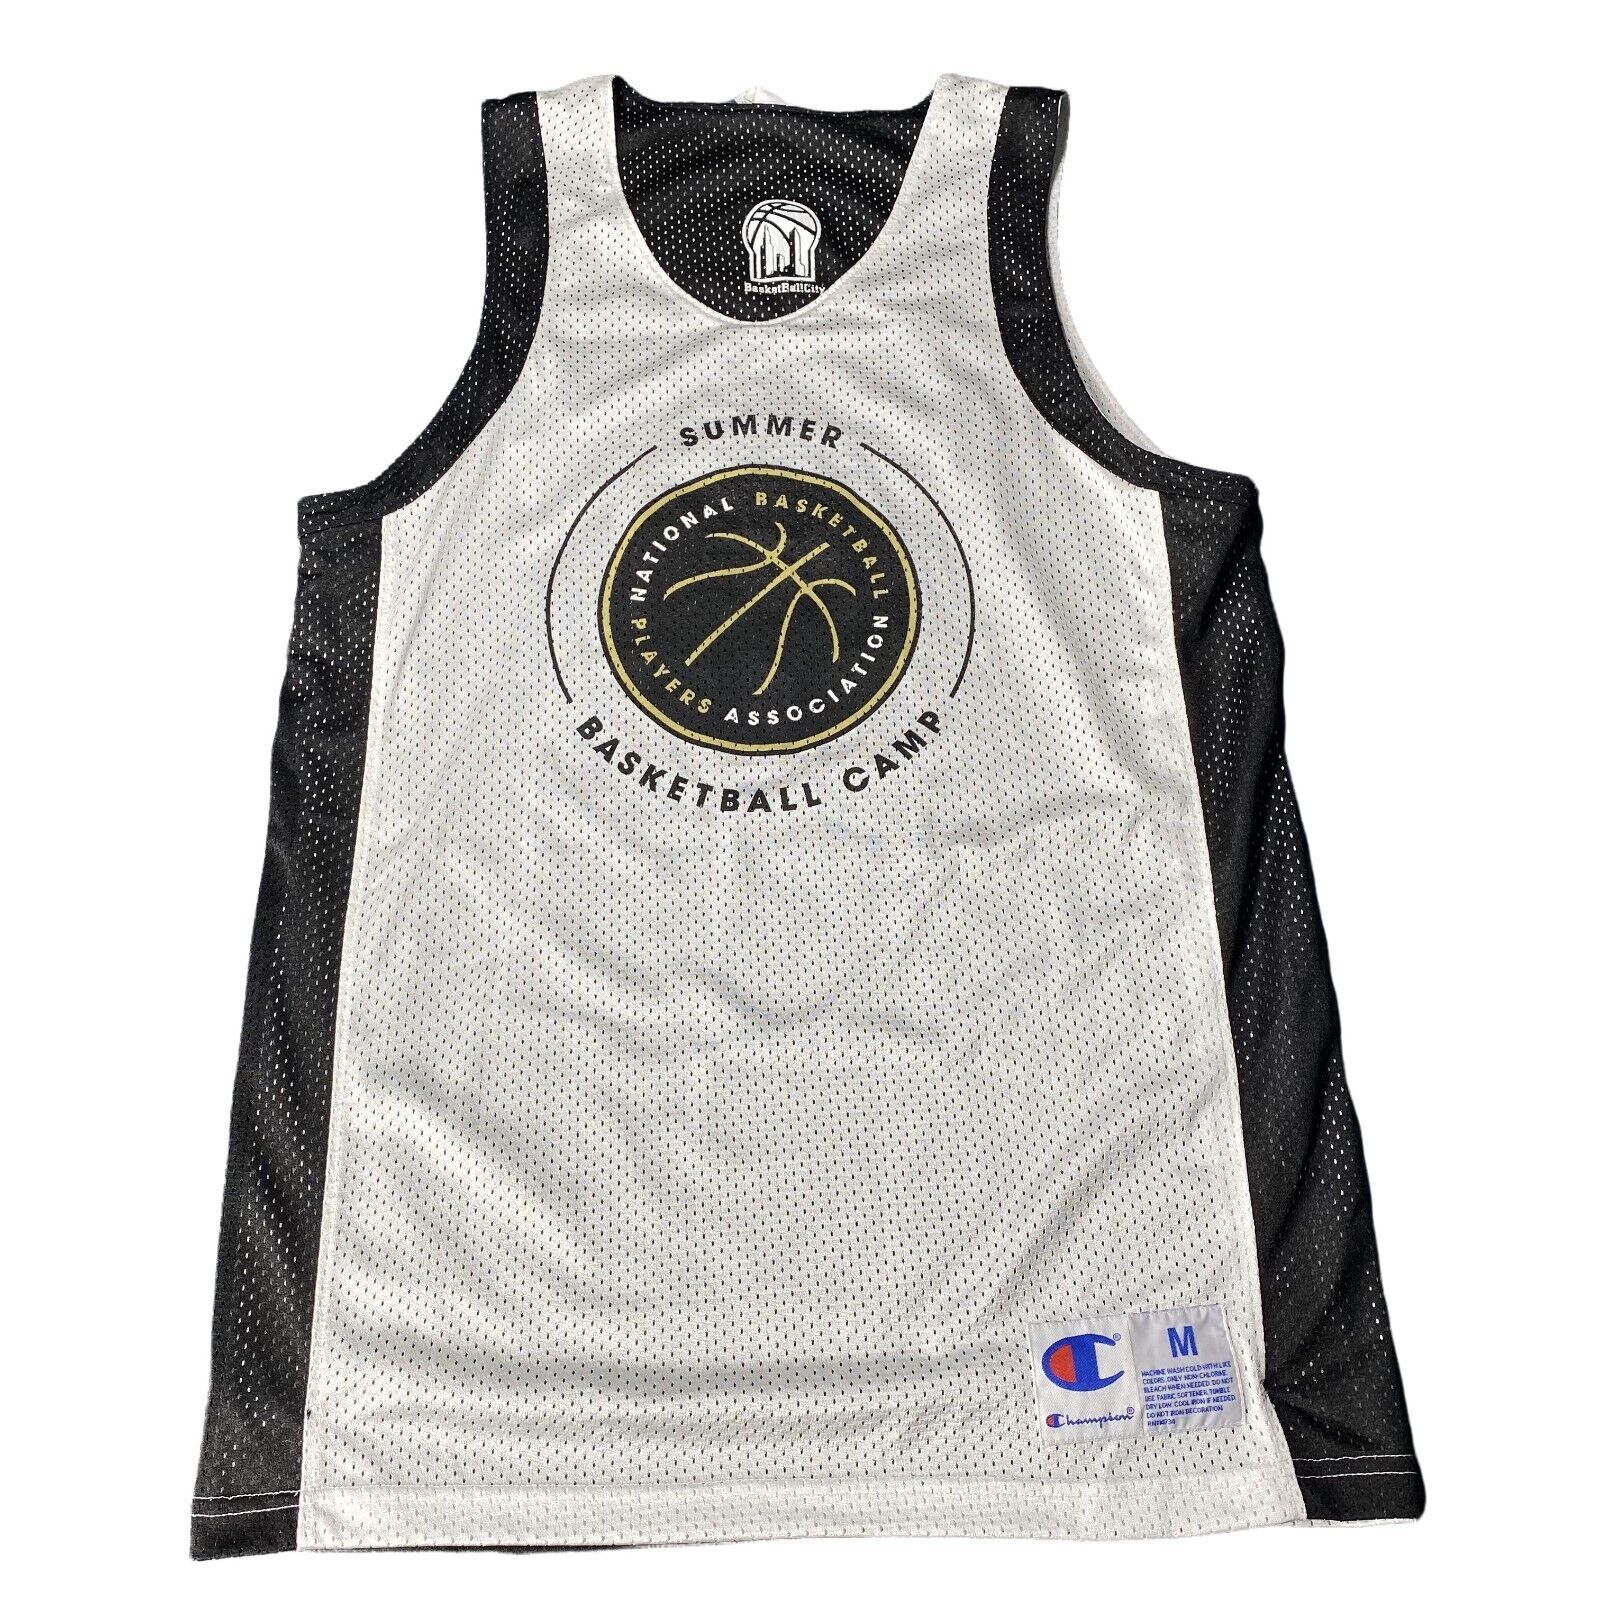 Baseline Reversible Jersey - Men's - Basketball, - NB Team Sports - US